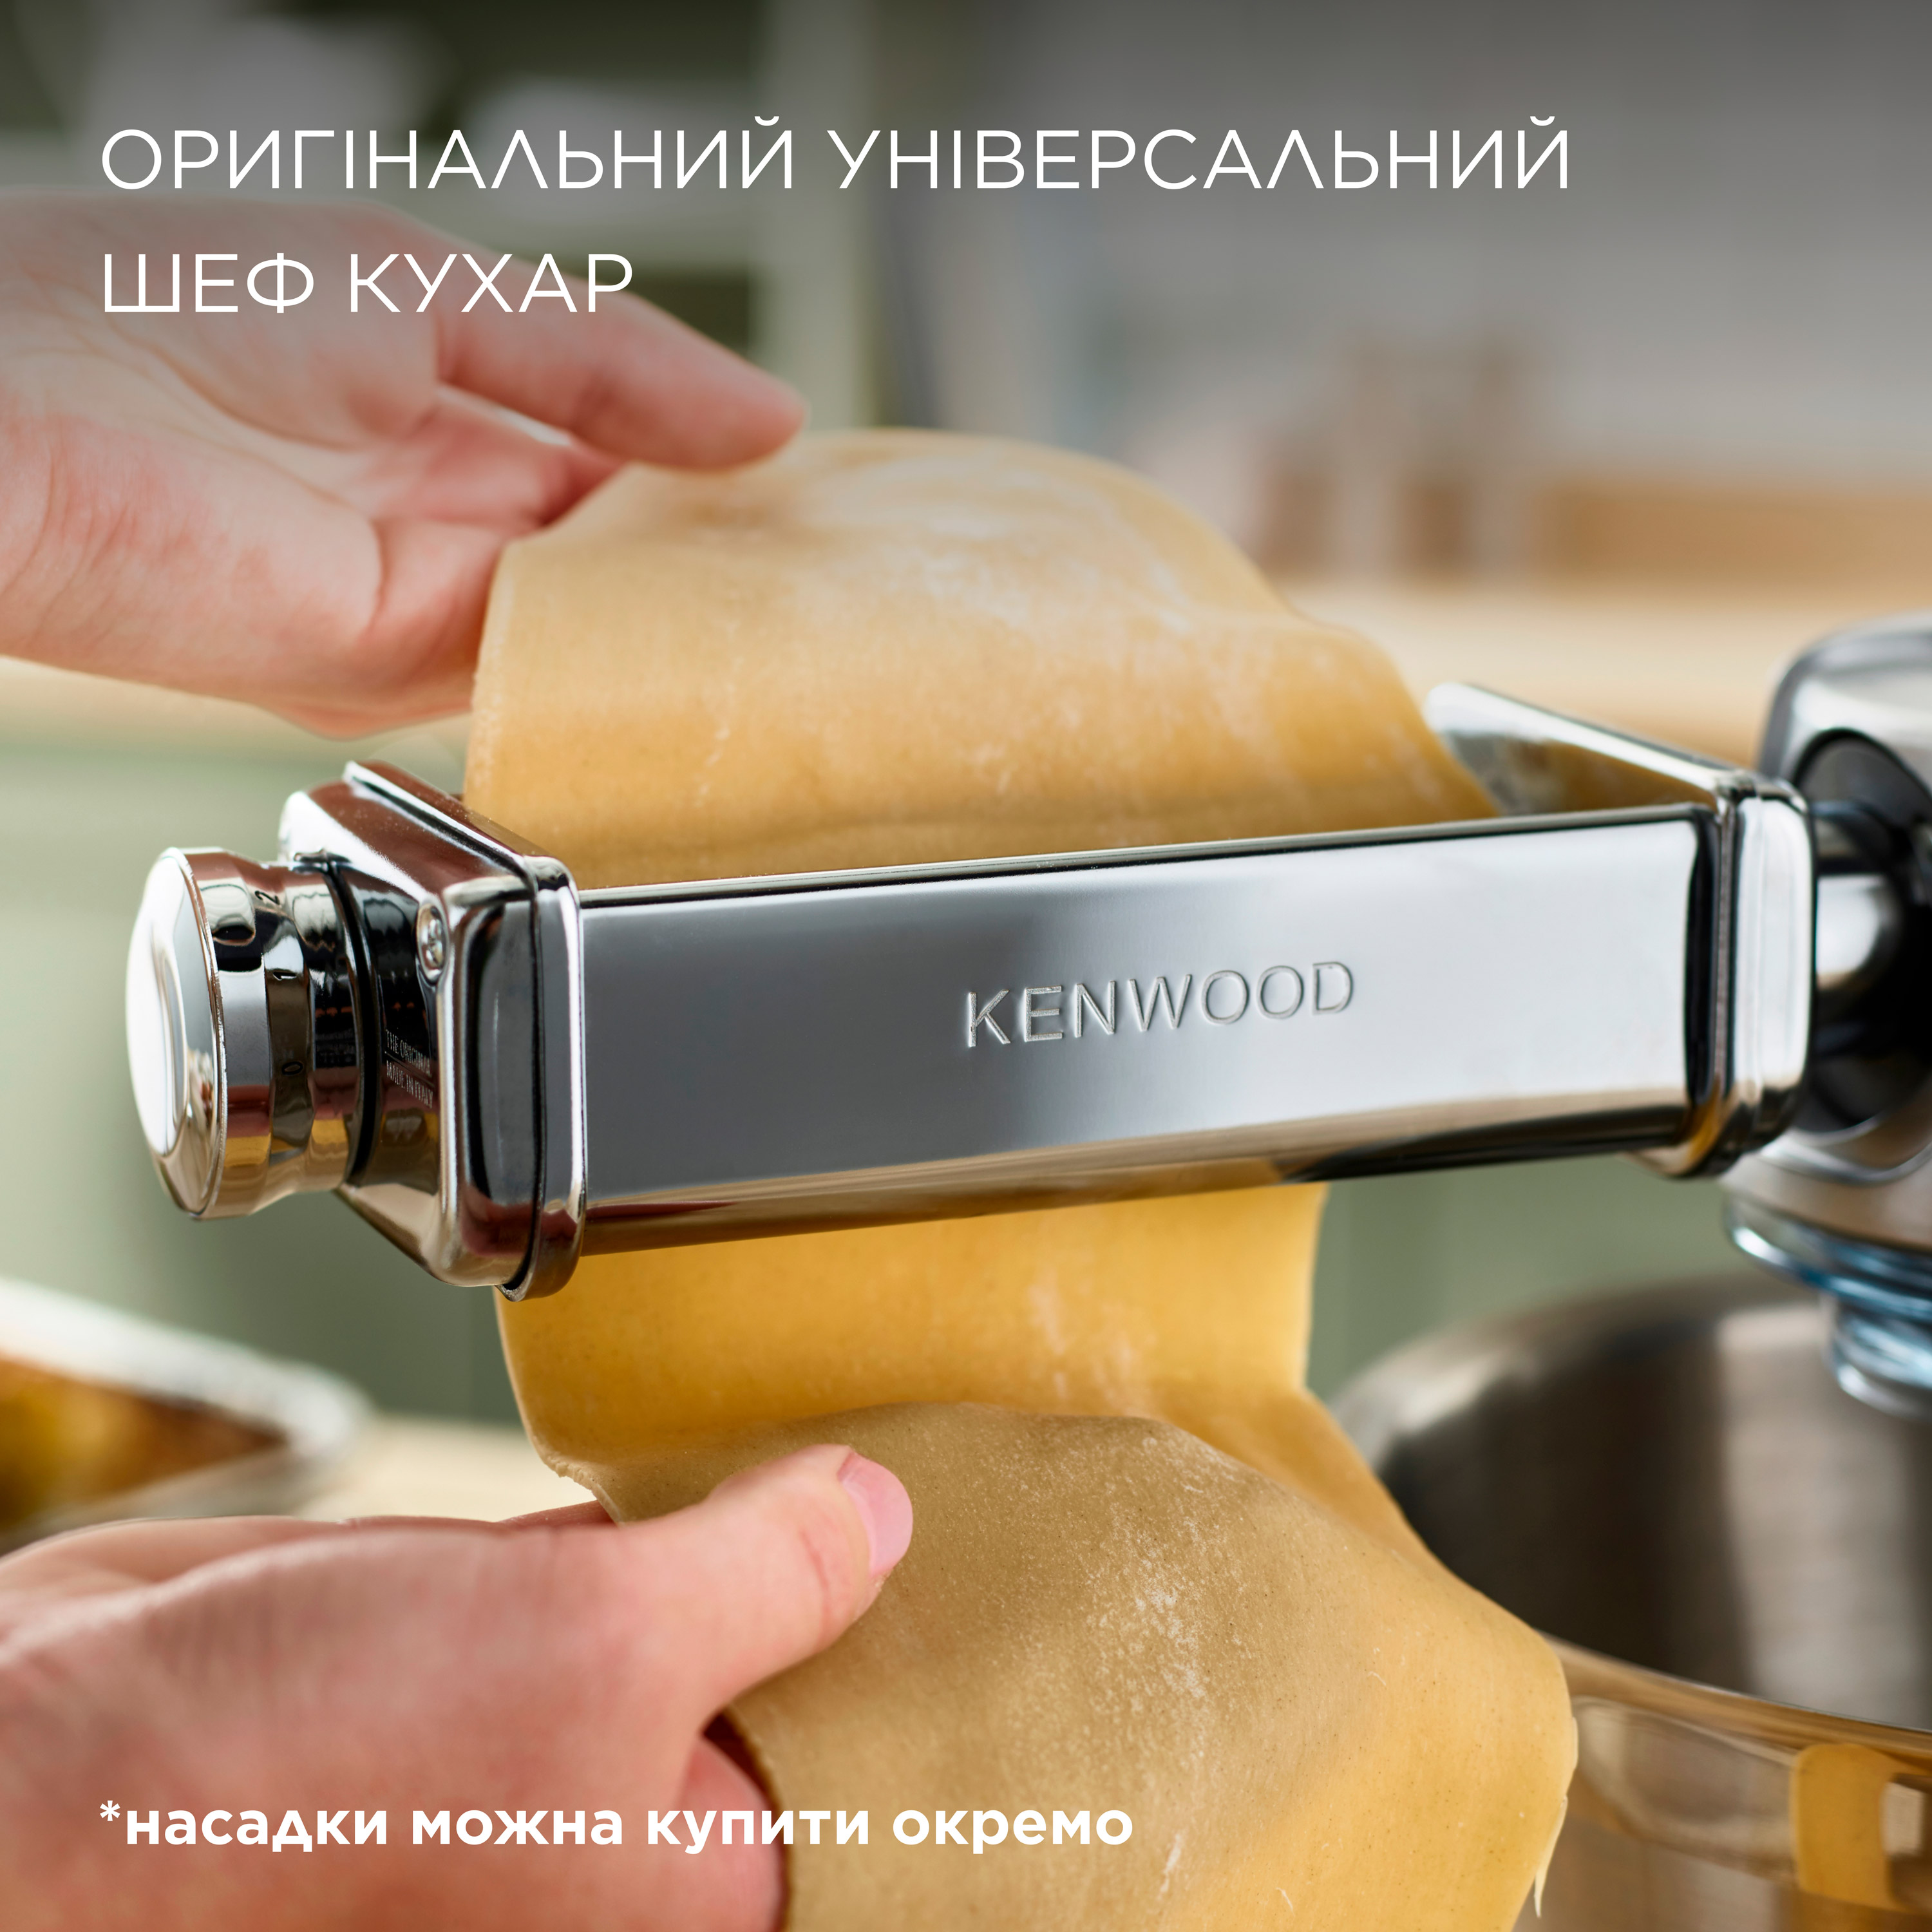 Кухонная машина Kenwood KVL 4100 S Chef XL обзор - фото 11